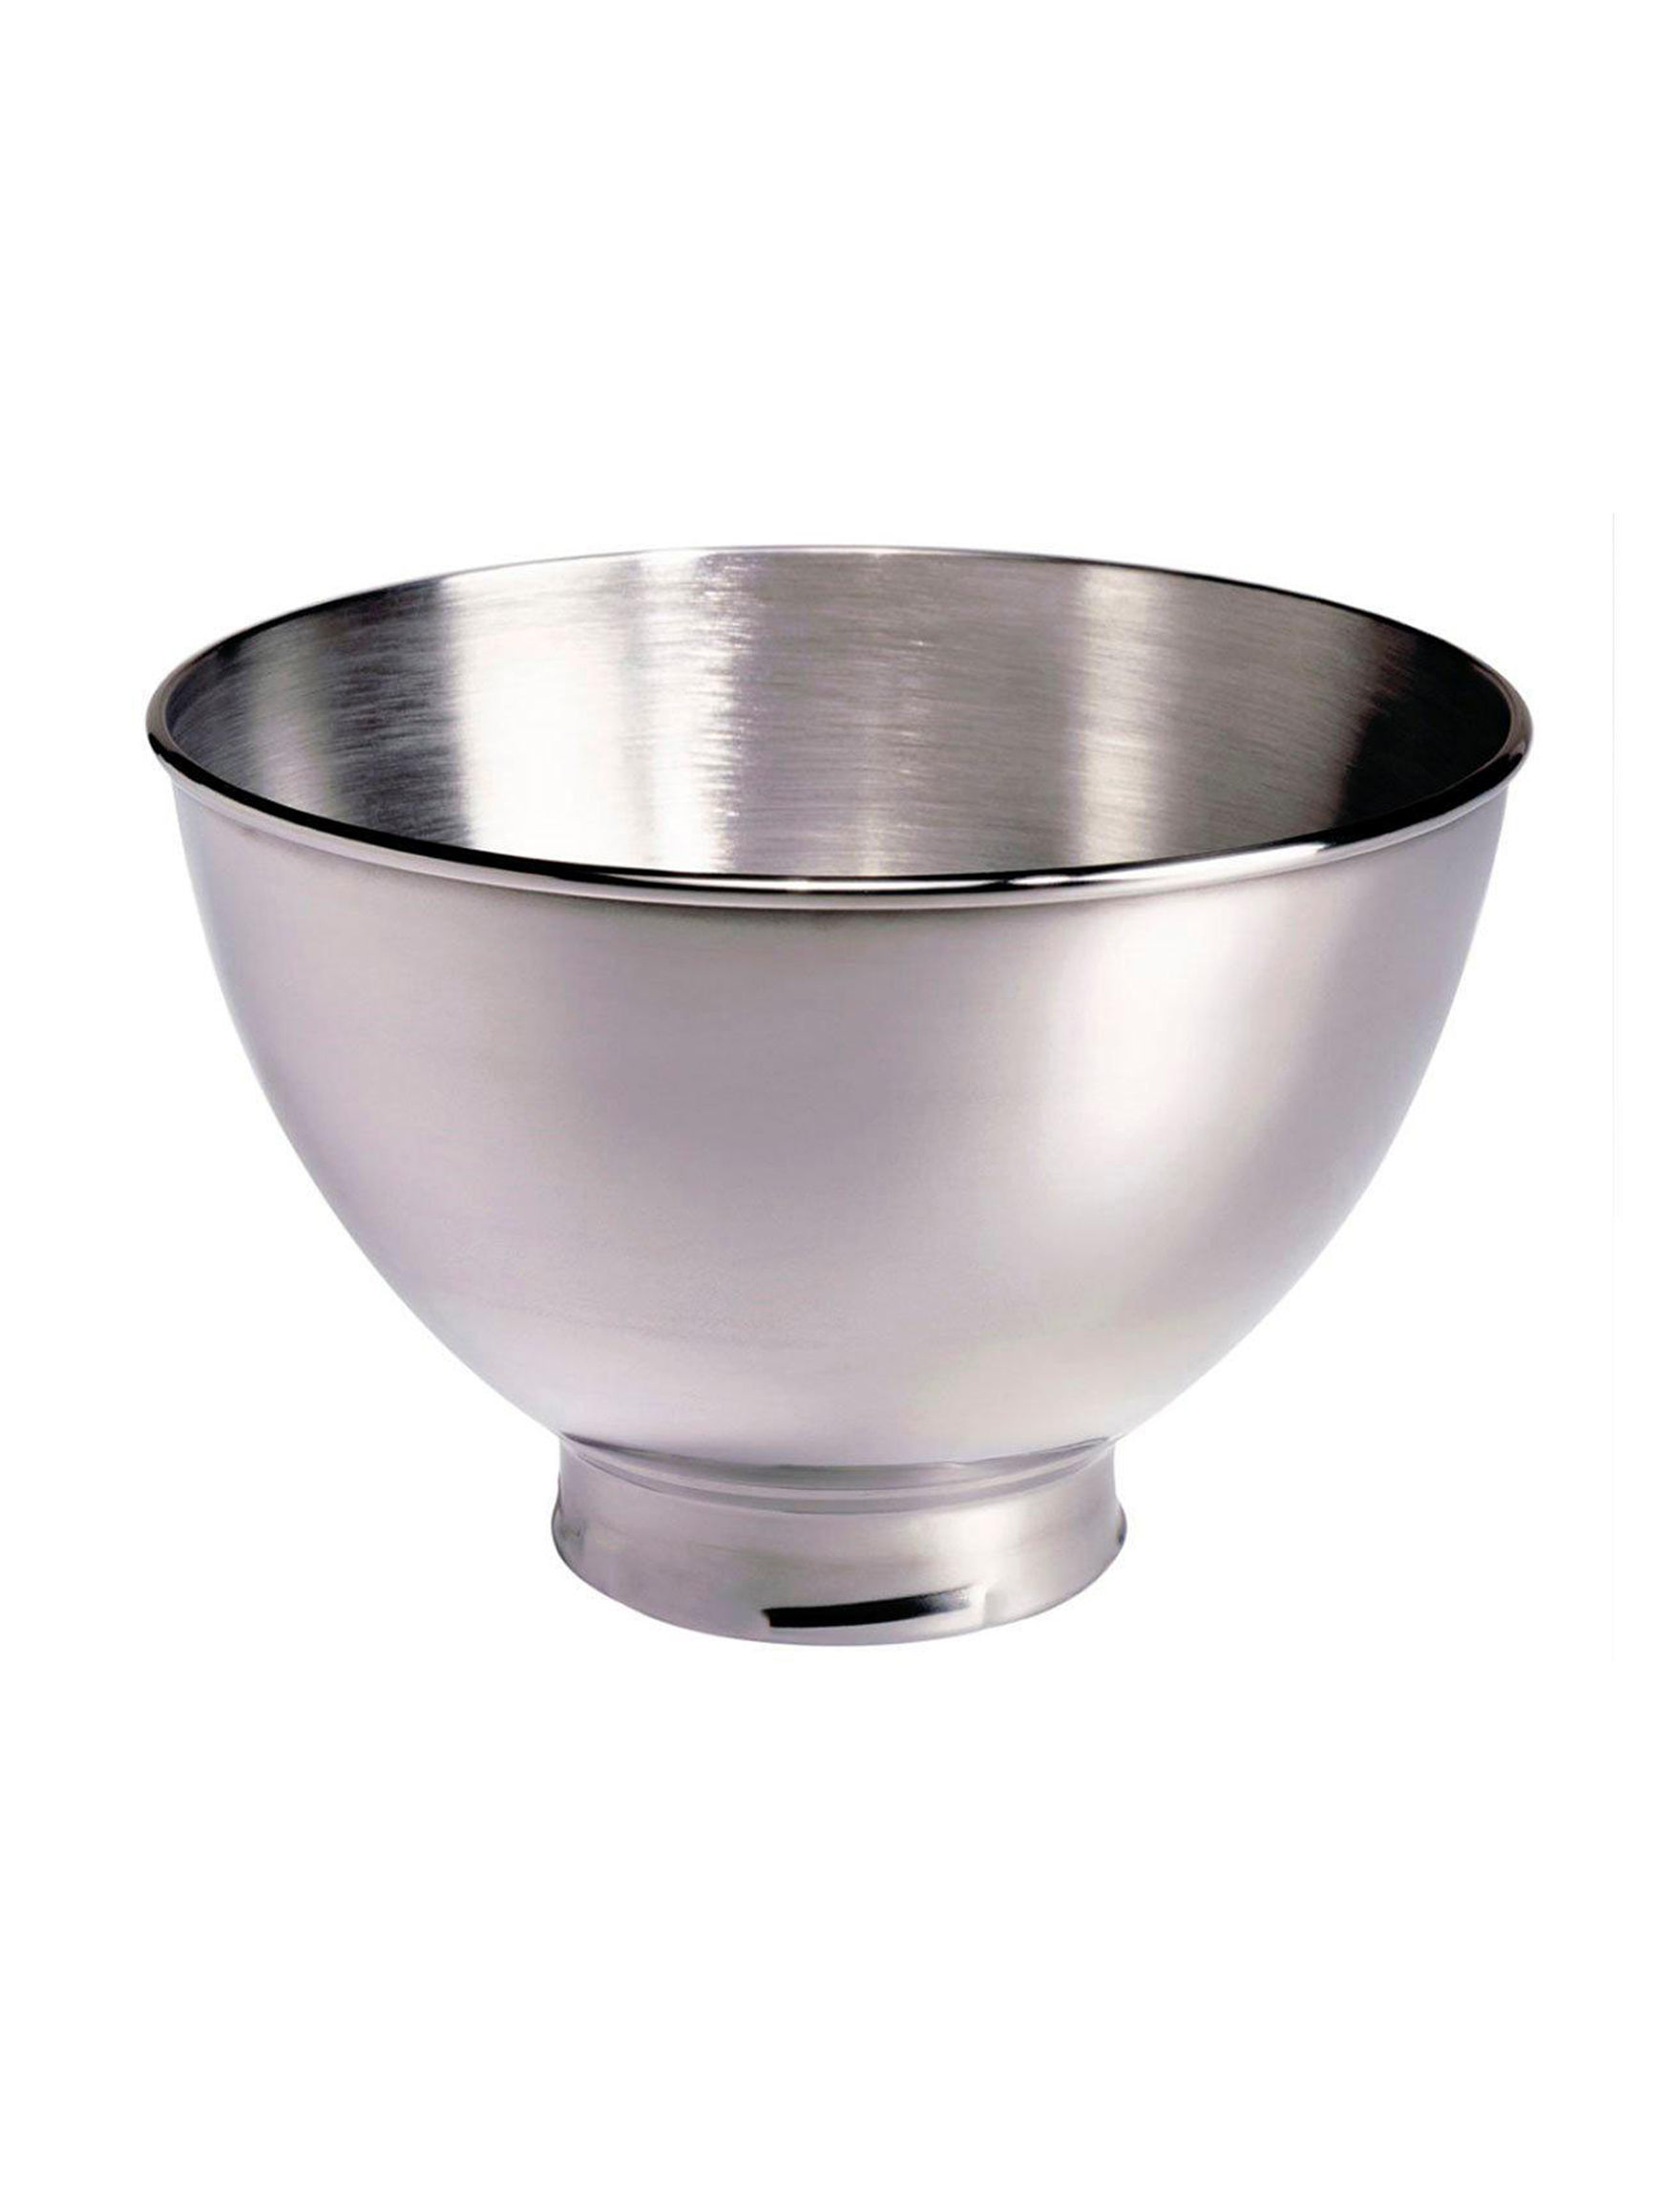 KitchenAid 3-Quart Stainless Steel Mixing Bowl | Stage Stores Kitchenaid 3-qt. Stainless Steel Bowl